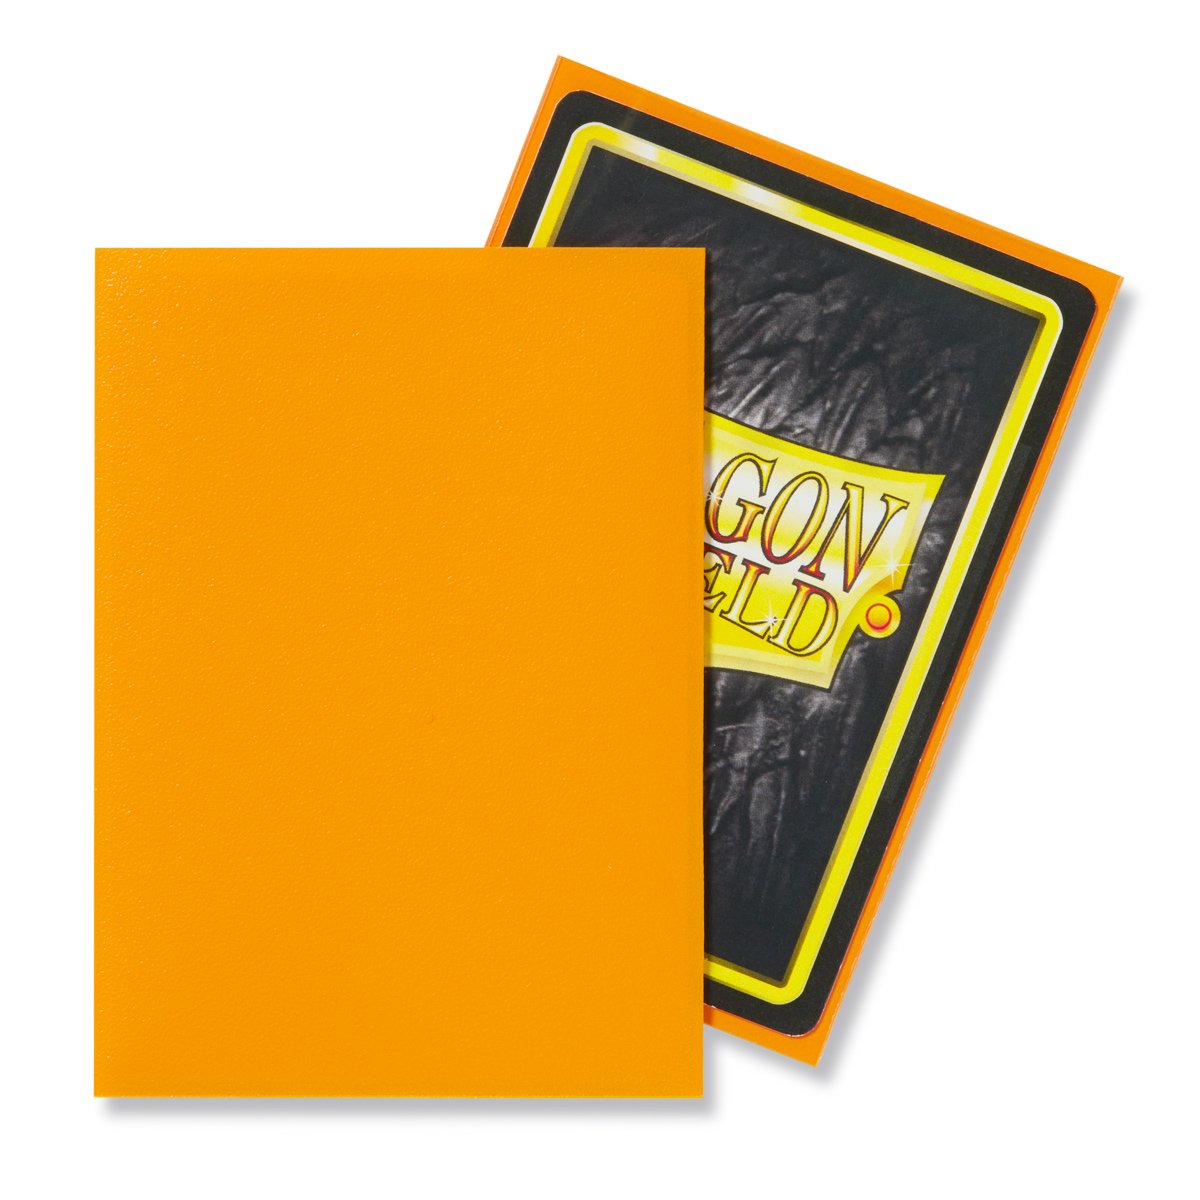 Dragon Shield Standard Matte Orange ‘Usaqin’ – (100ct) | Yard's Games Ltd